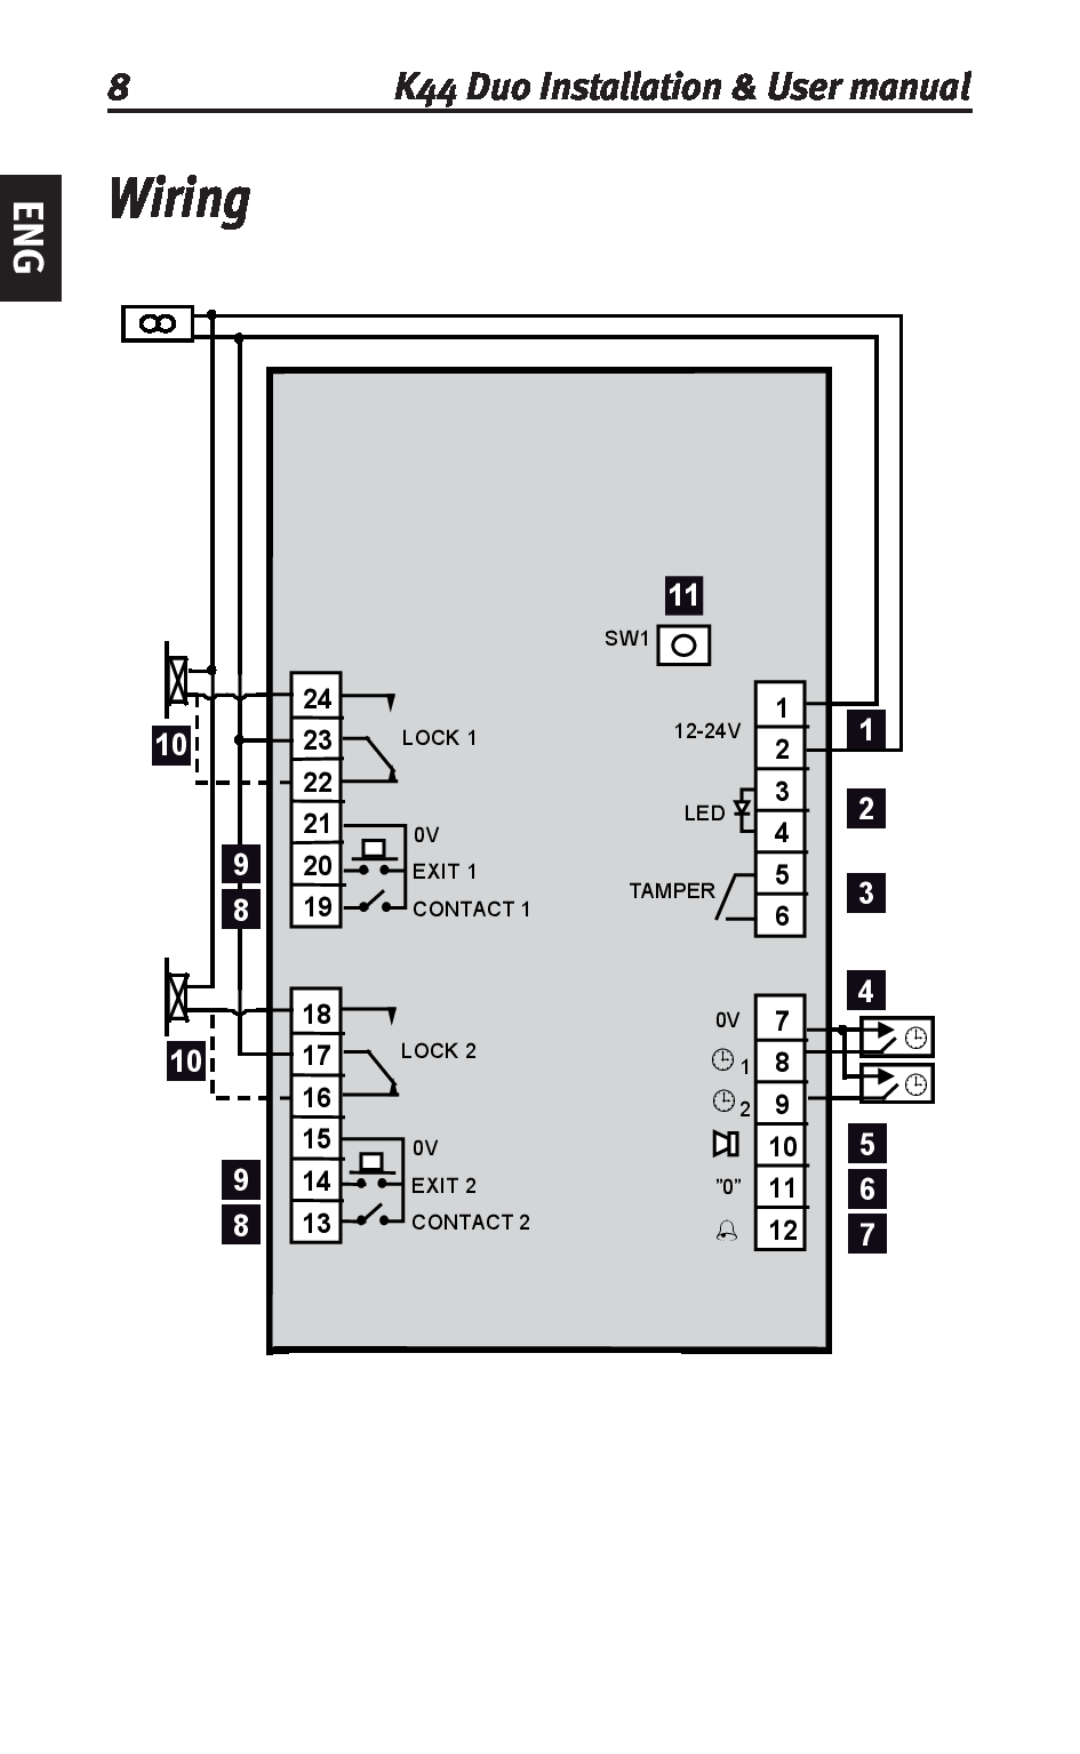 Siemens user manual Wiring, K44 Duo Installation & User manual 